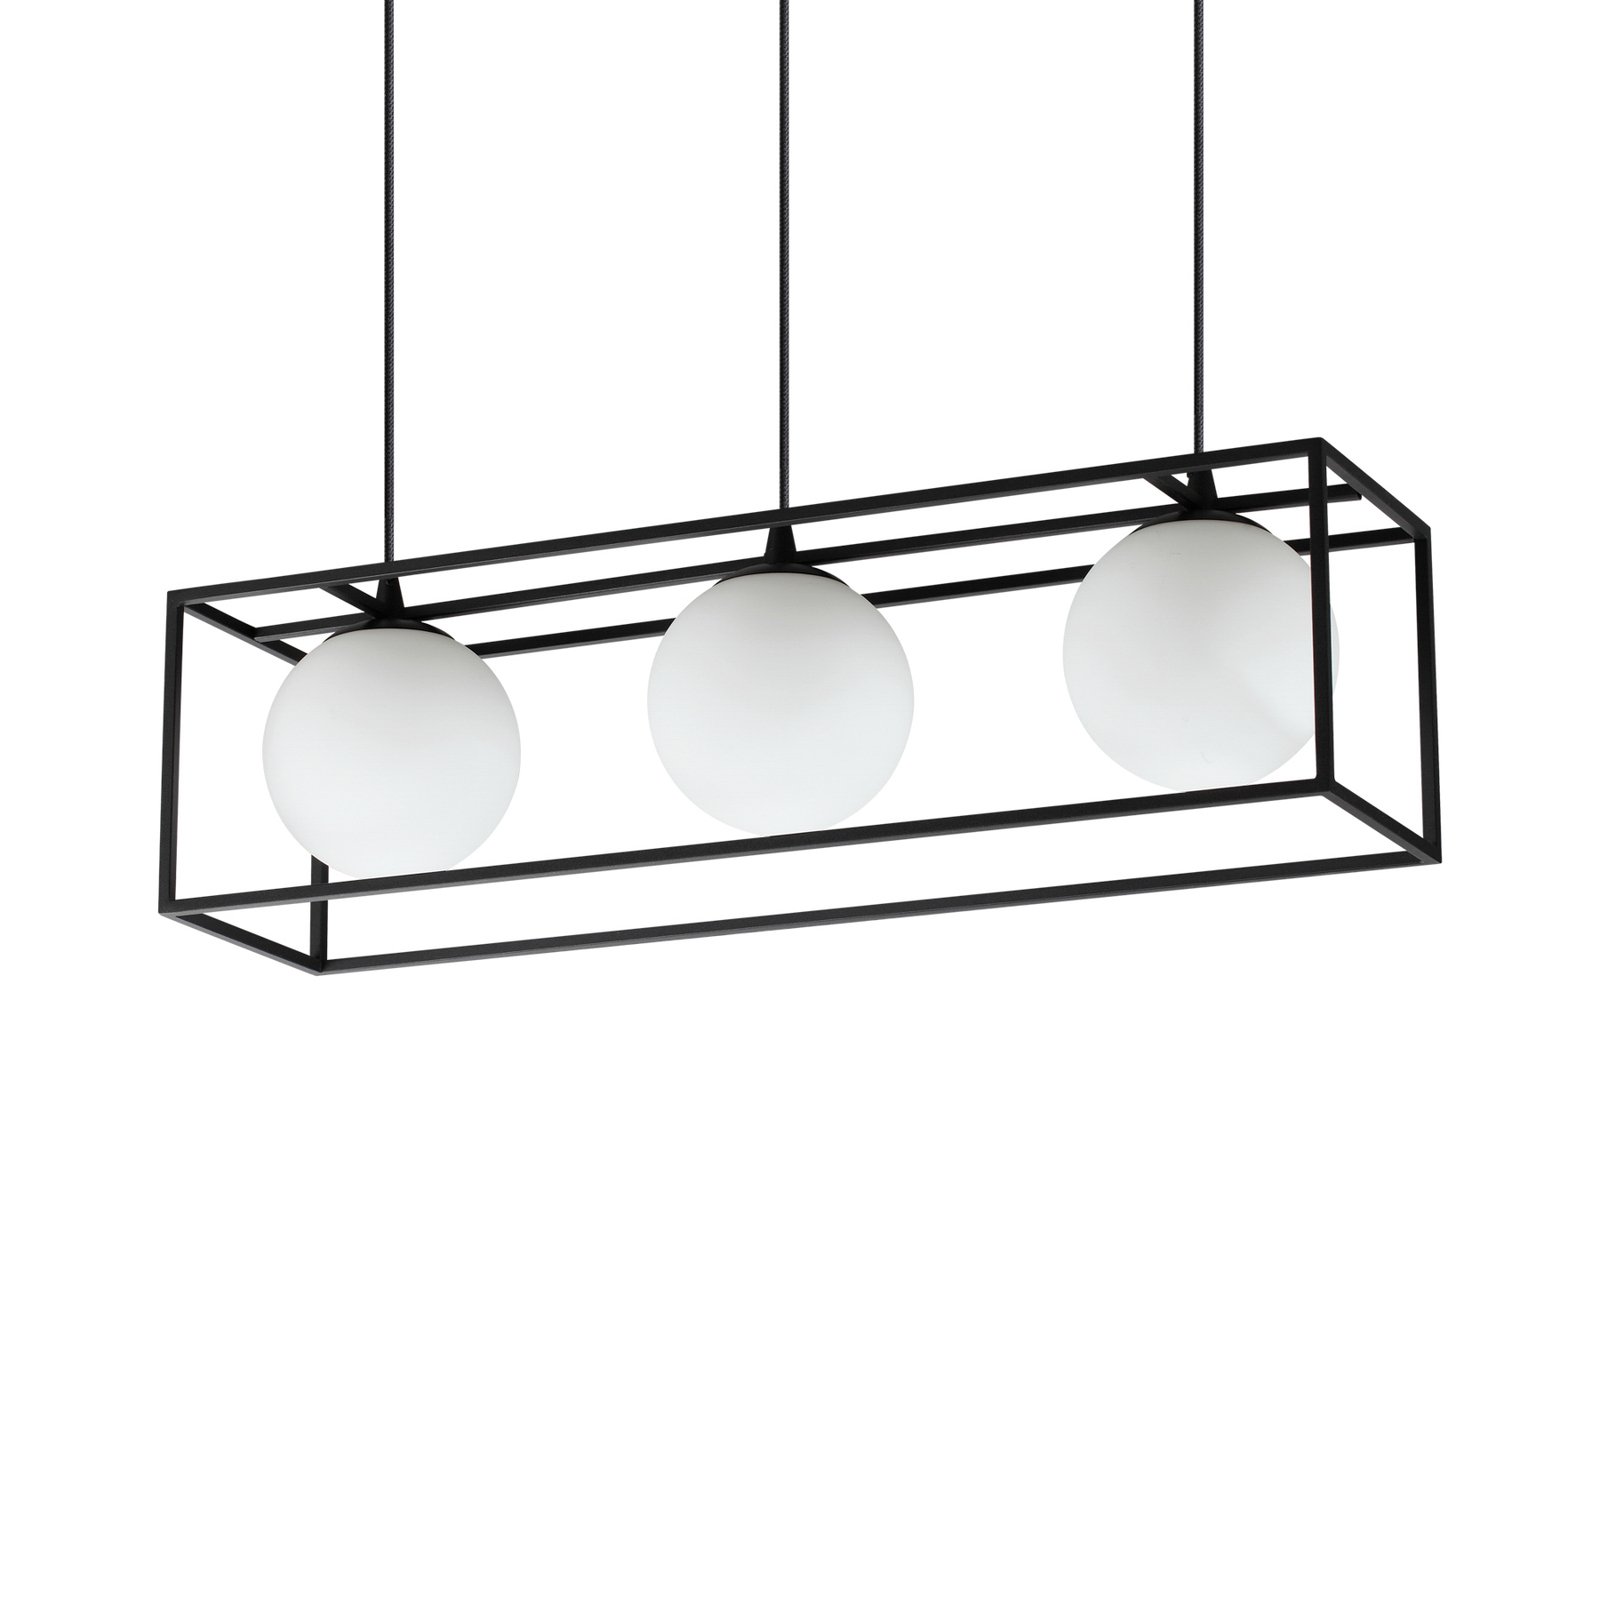 Viseća lampa Ideal Lux Lingotto, 3 svjetla, jedan kavez, crna